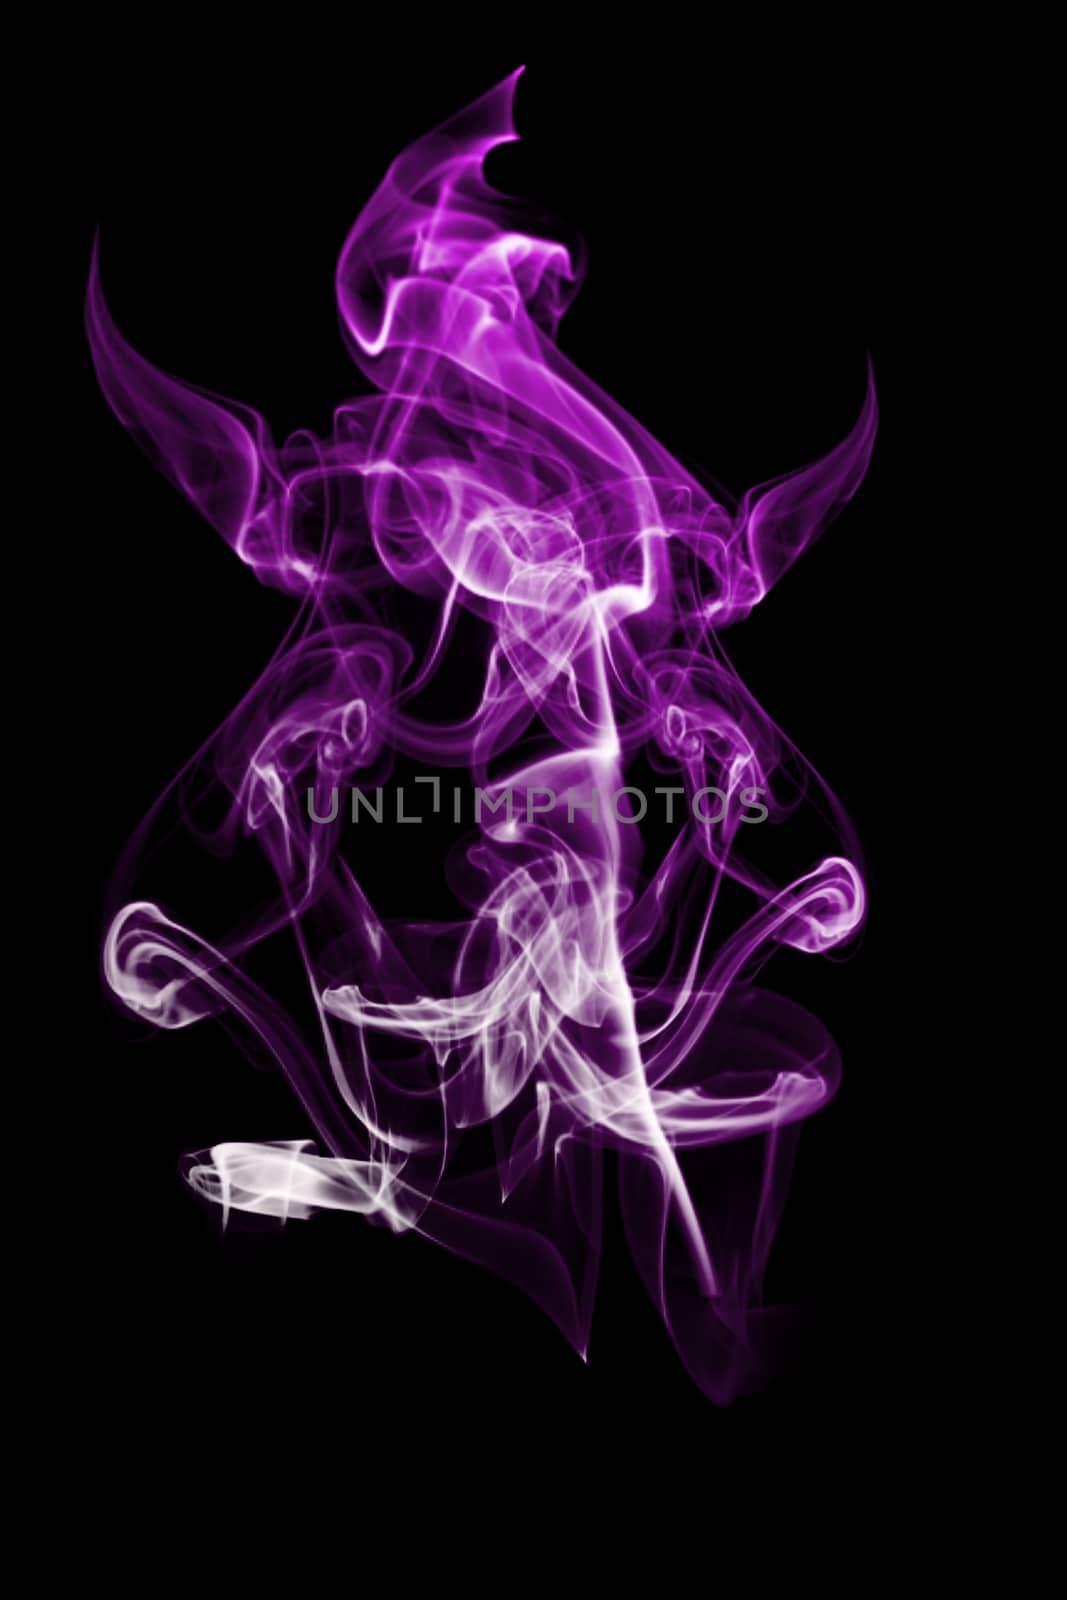 purple smoke on black background by a3701027